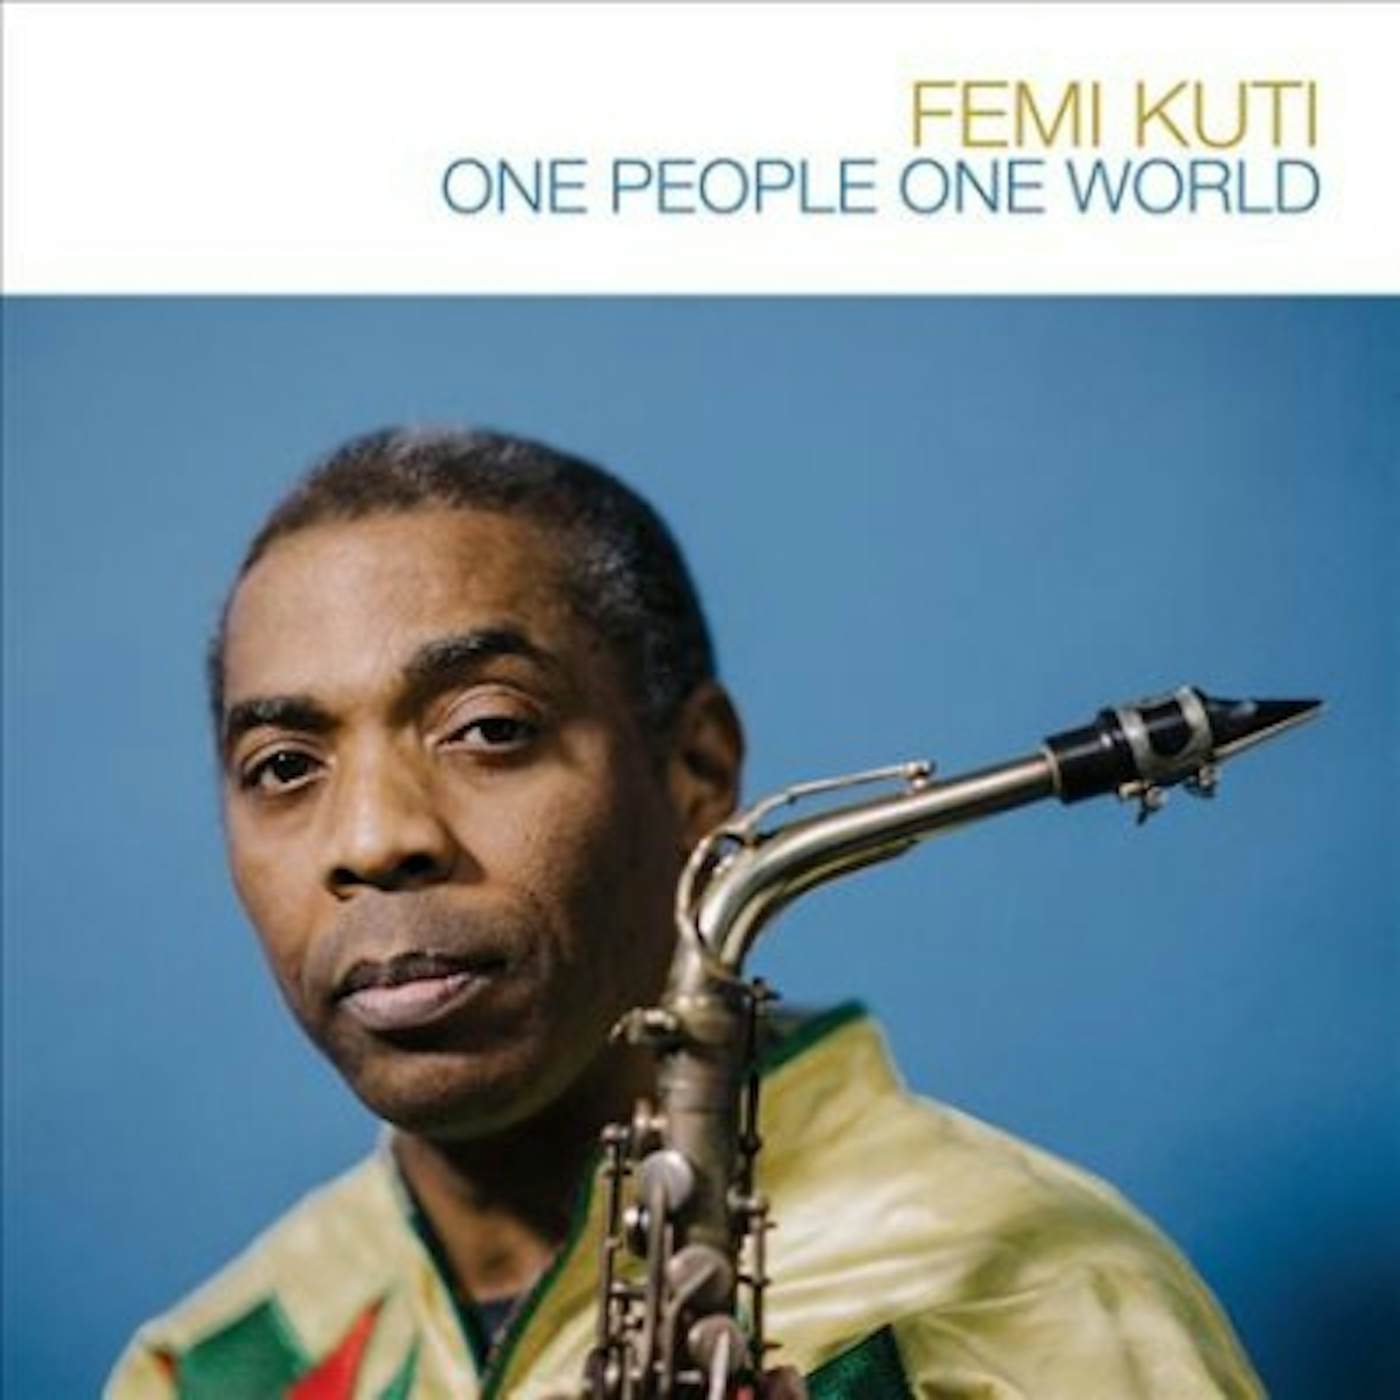 Femi Kuti One people one world Vinyl Record